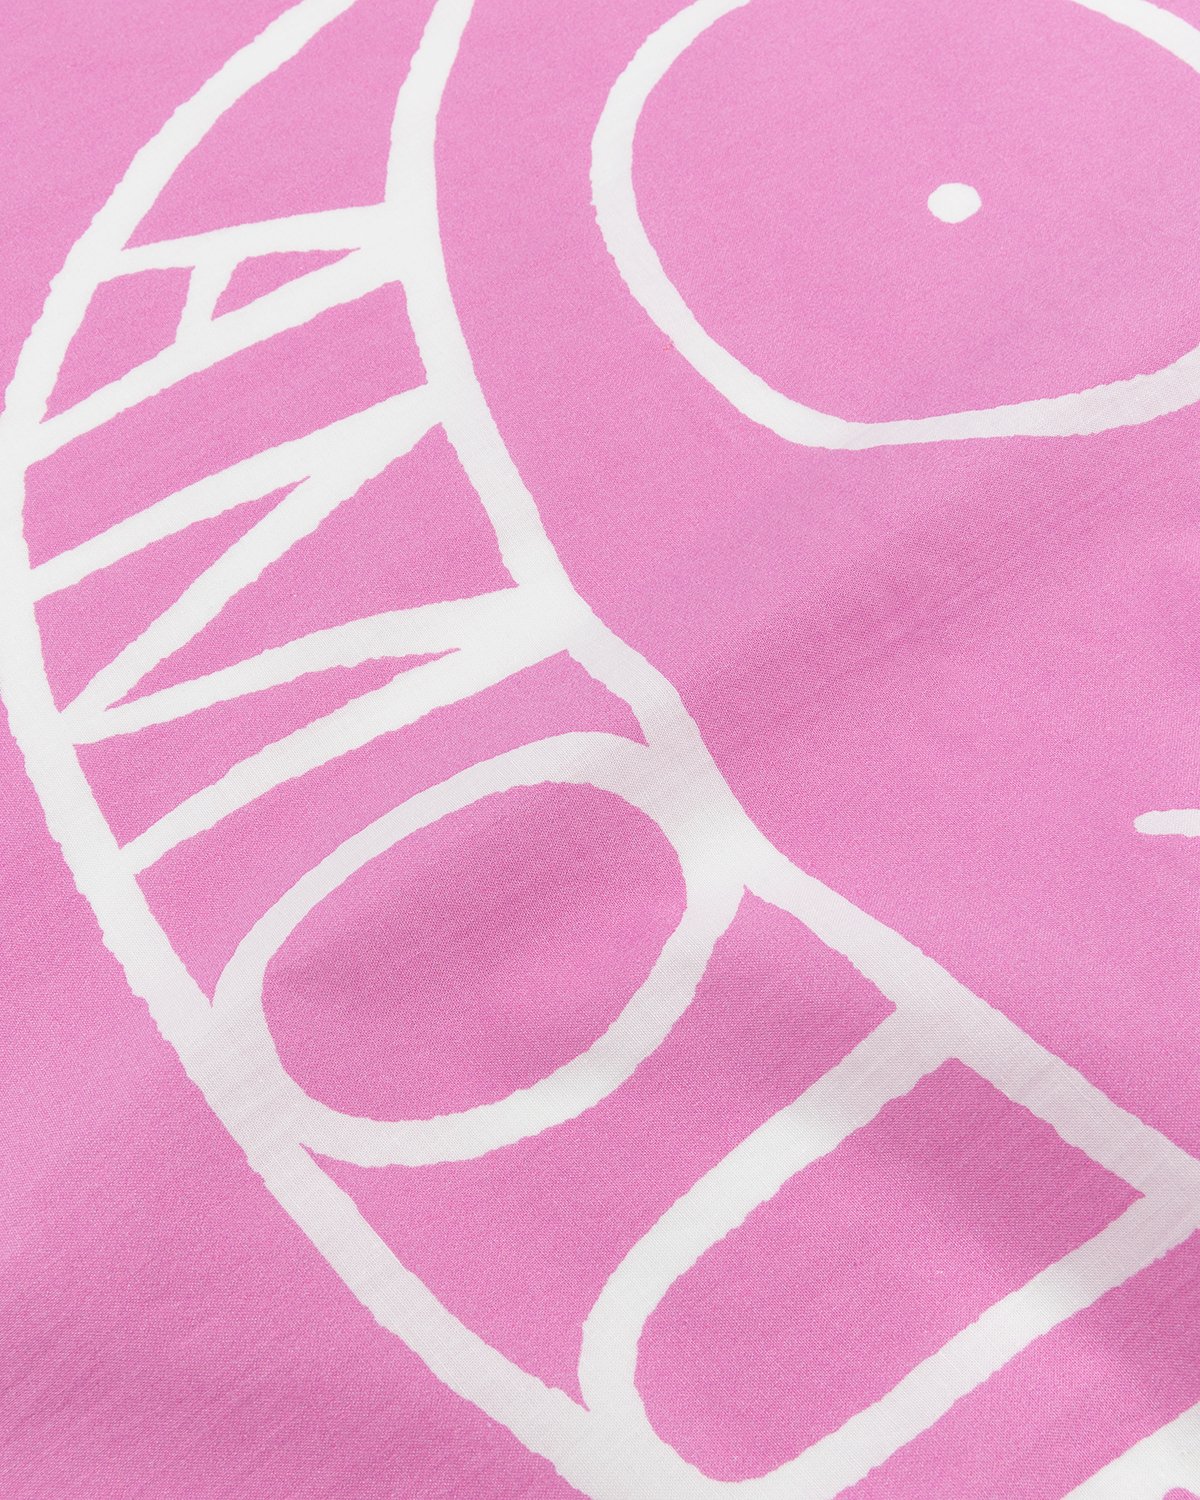 Longchamp x André Saraiva - Stoles Pink - Accessories - Pink - Image 5